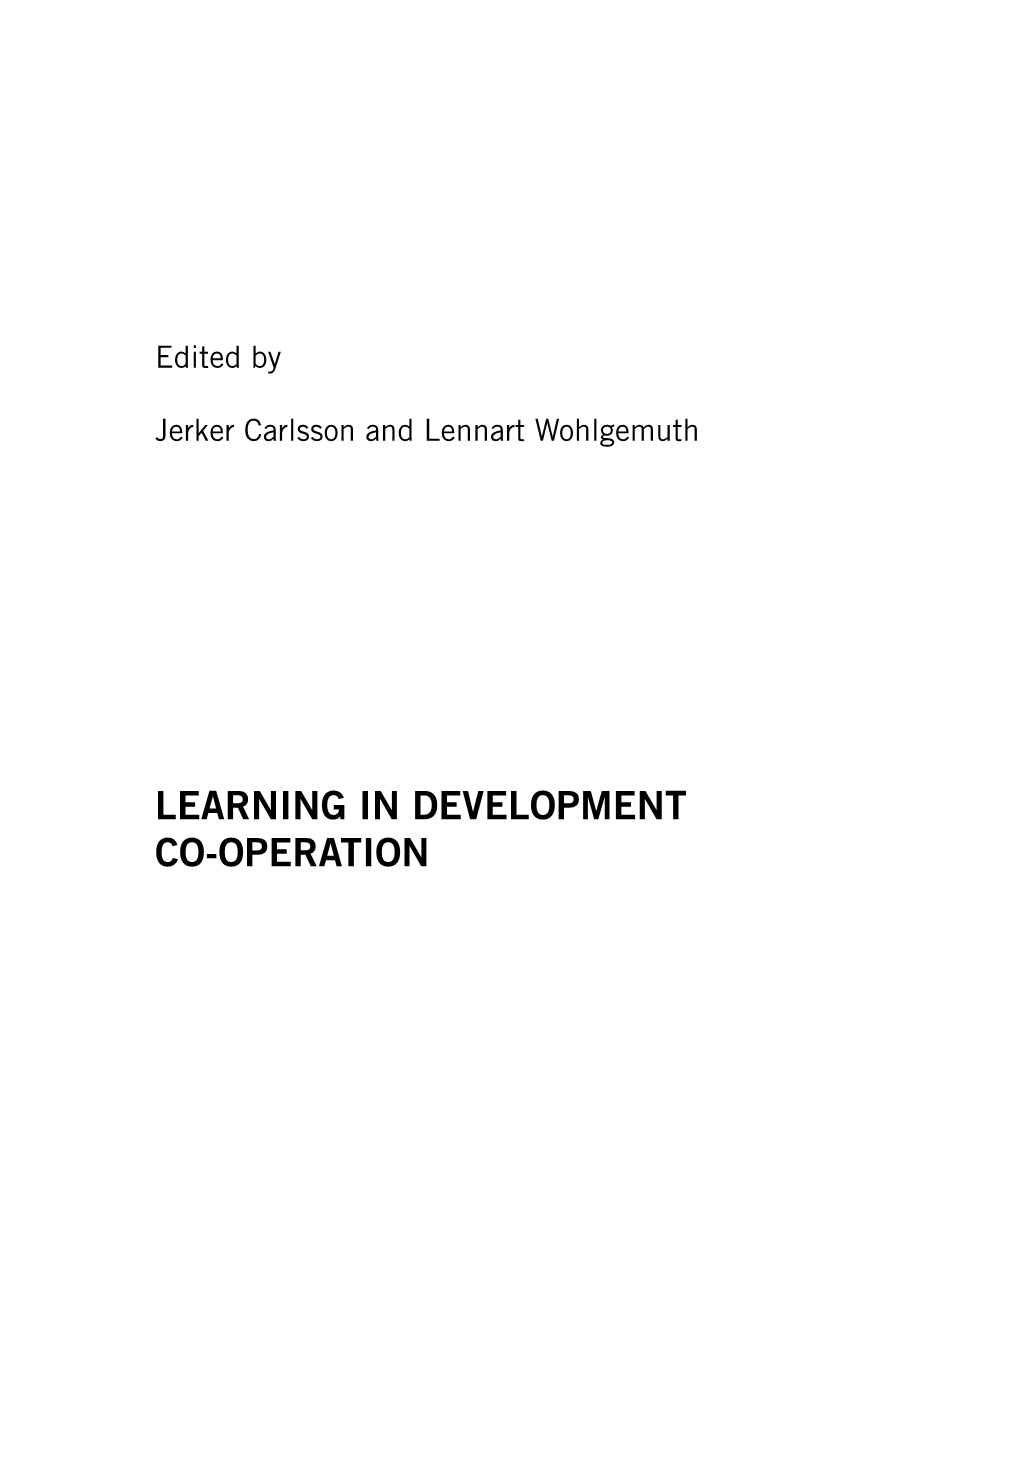 Learning in Development Co-Operation 2